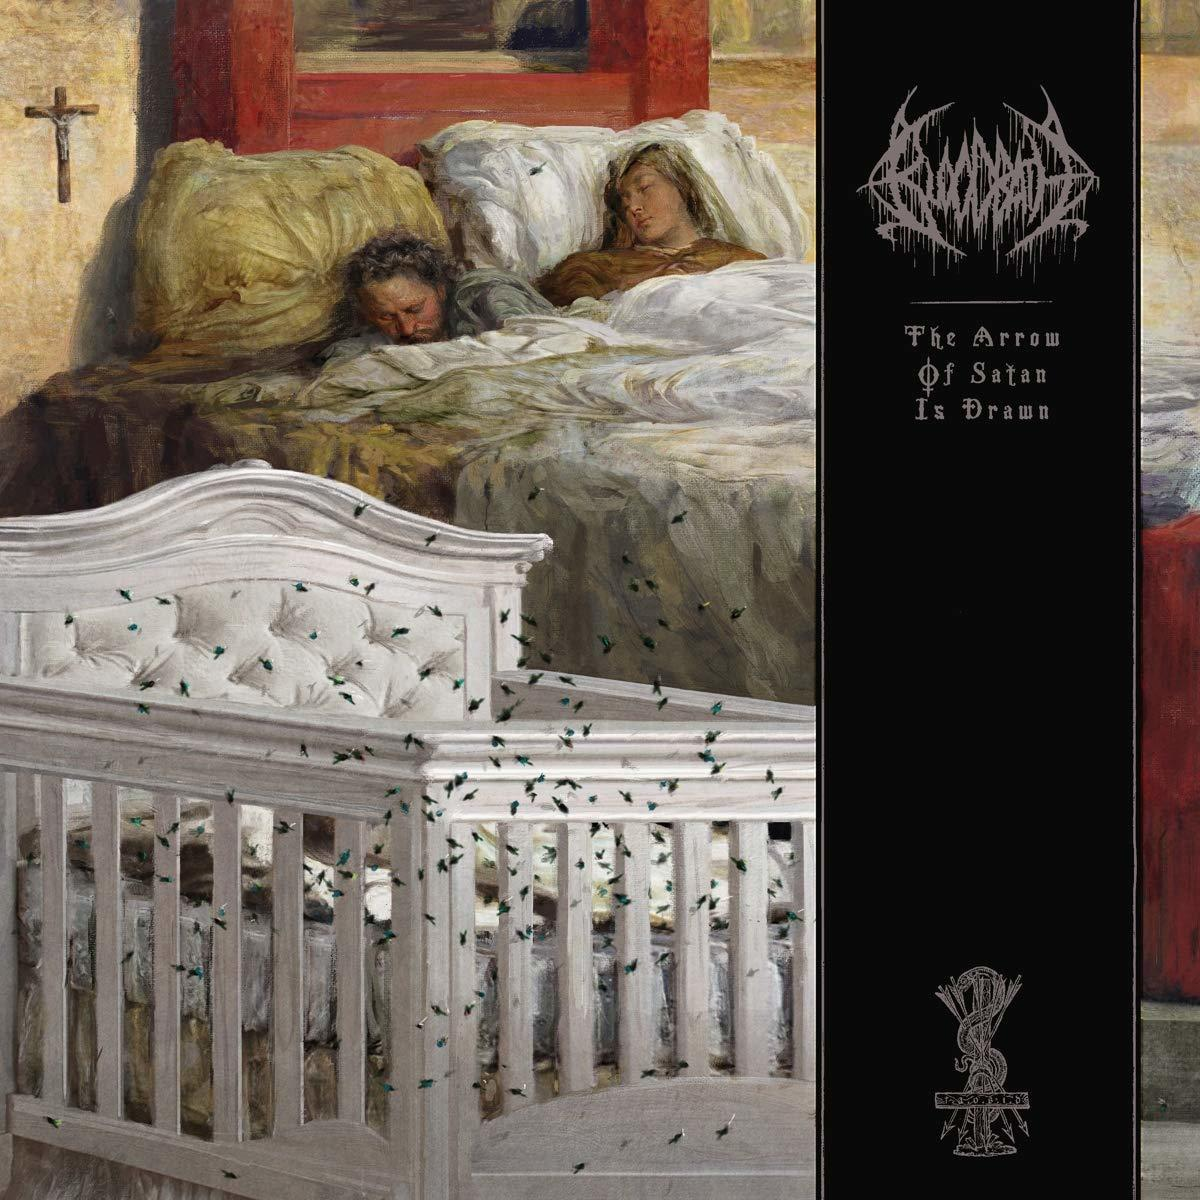 Bloodbath Of Arrow Drawn Is - (Vinyl) Satan - The